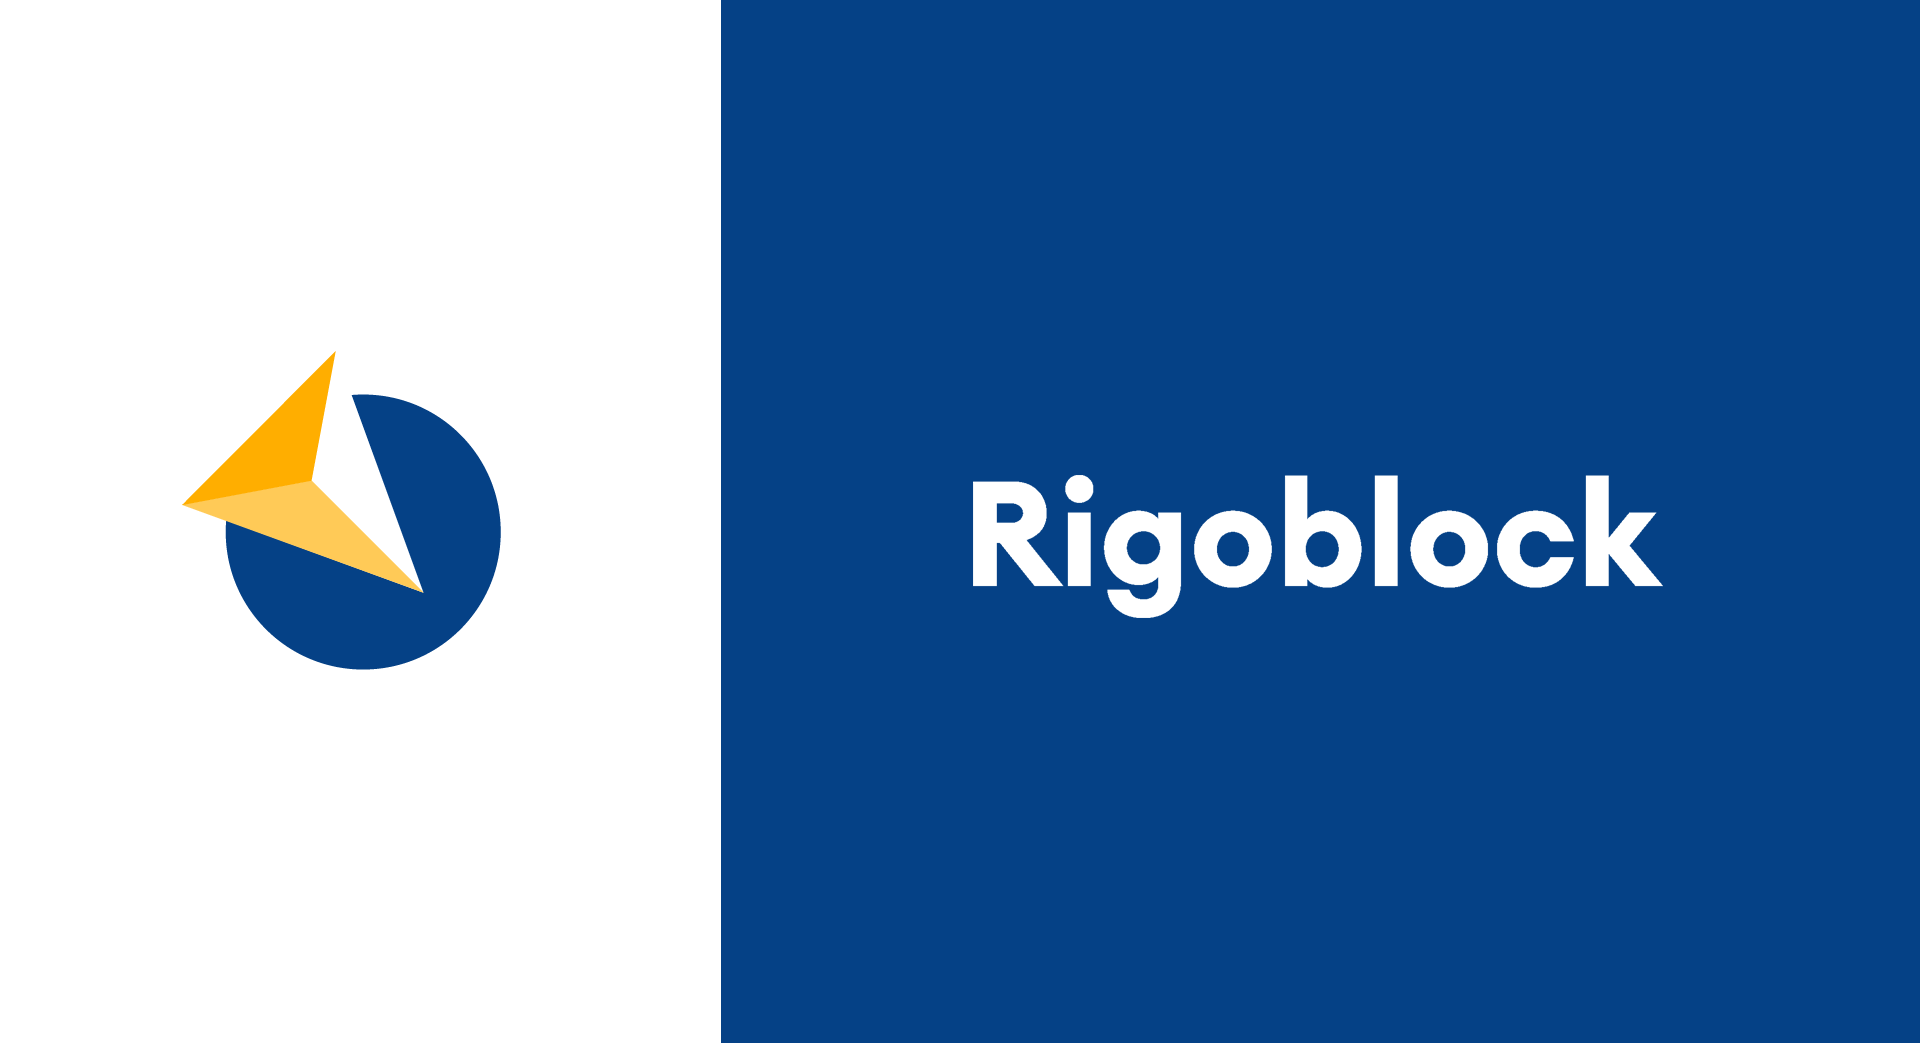 RigoBlock Announces Token Sale to Provide Decentralized Asset Management For All